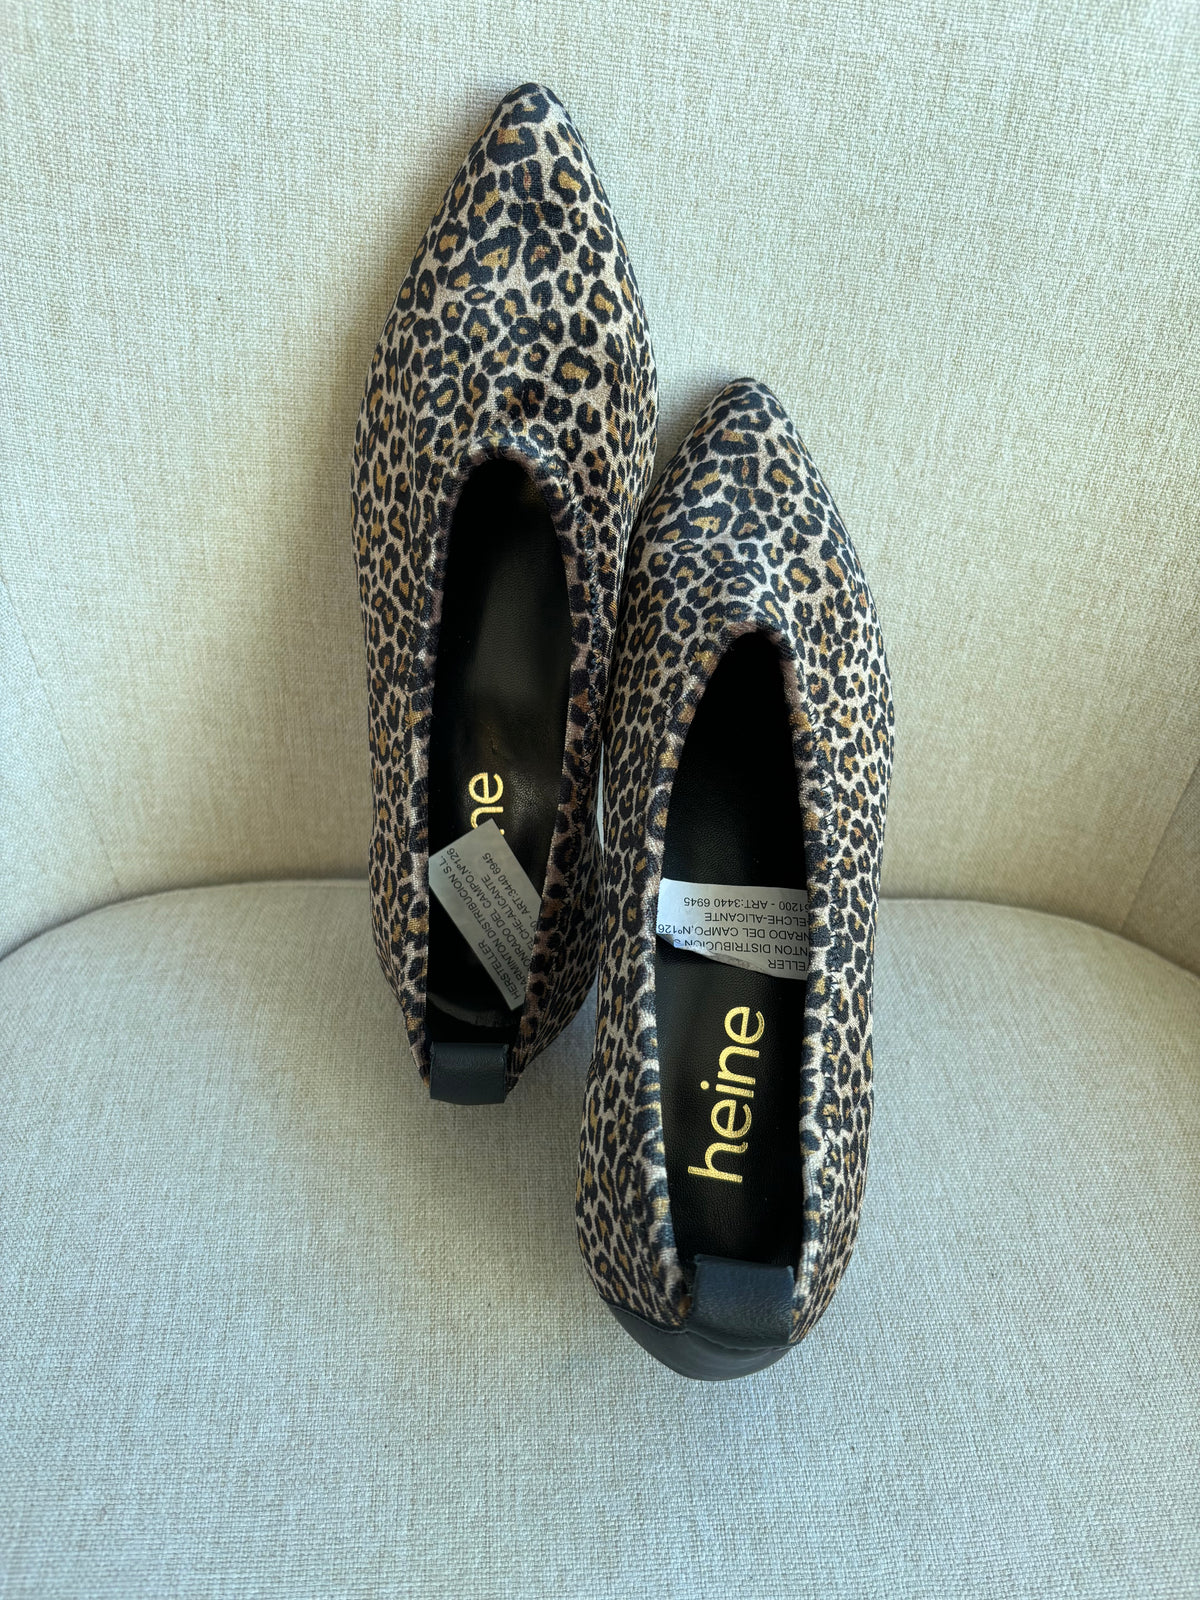 Stunning leopard print velour heels shoes by Heine size 5